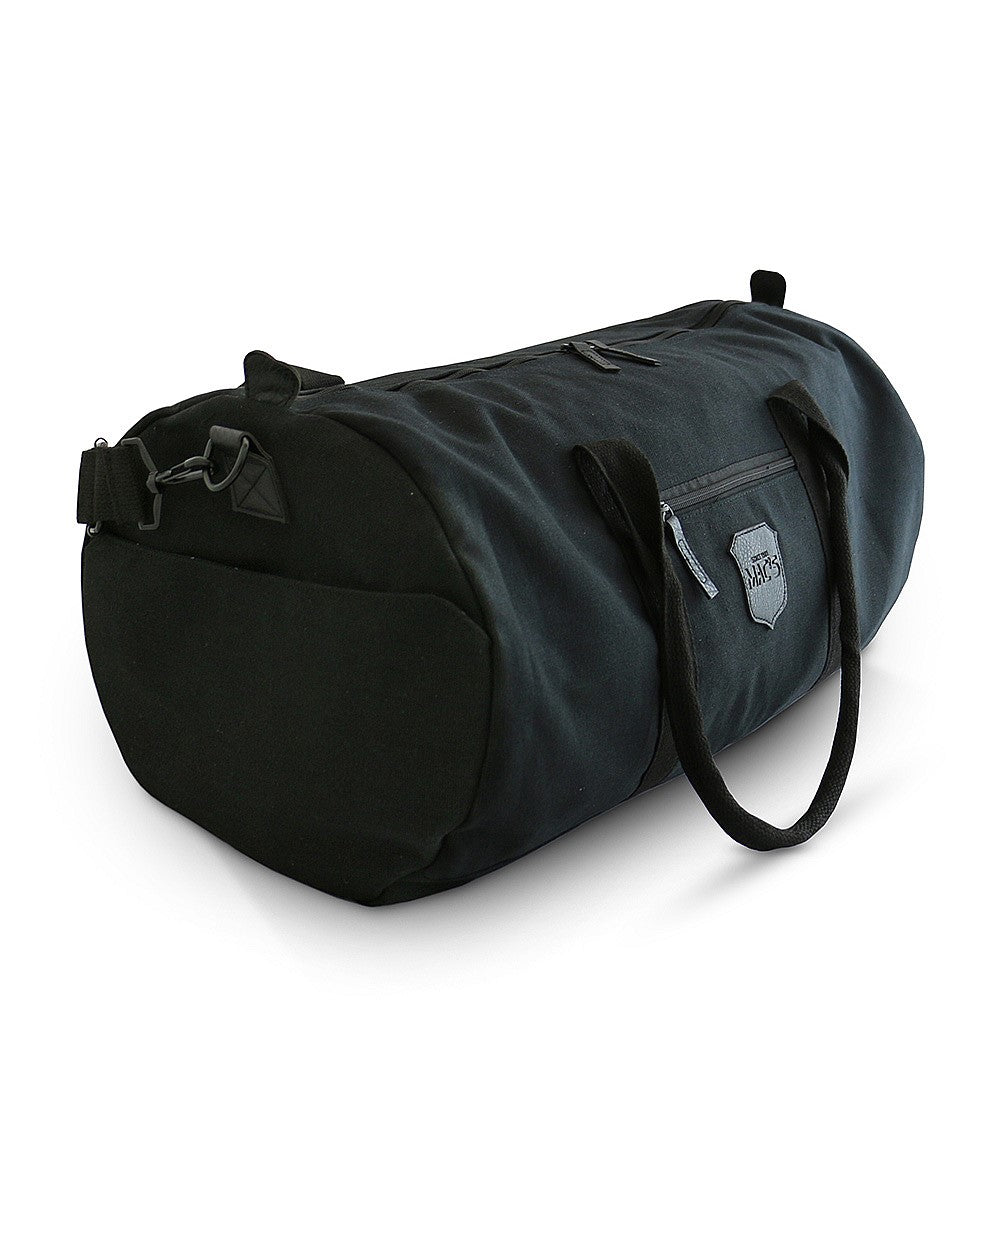 MAC's Travel Bag - Wear It Proud NZL